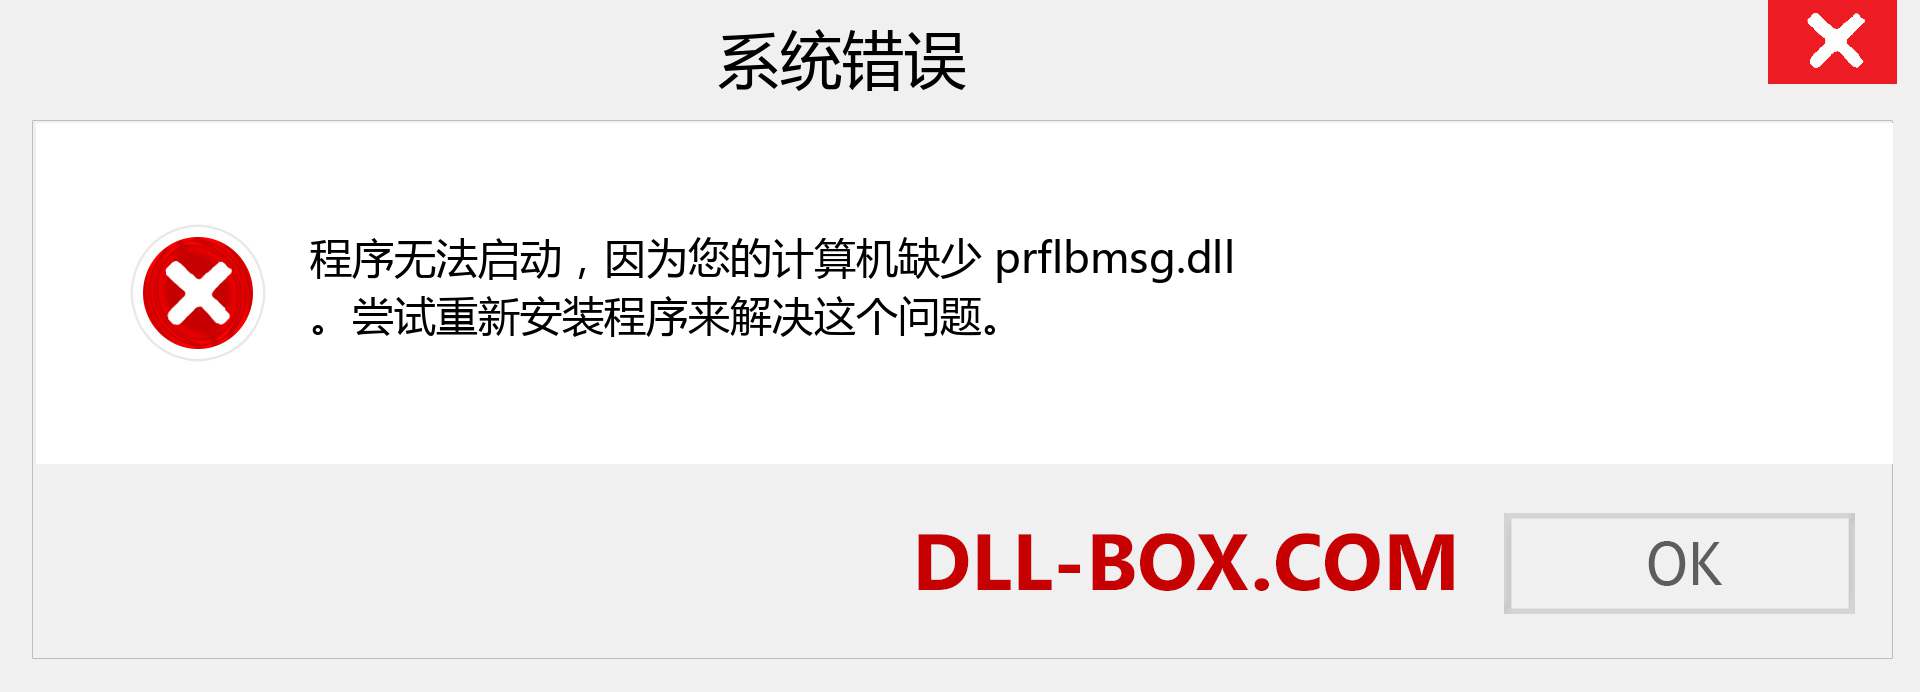 prflbmsg.dll 文件丢失？。 适用于 Windows 7、8、10 的下载 - 修复 Windows、照片、图像上的 prflbmsg dll 丢失错误